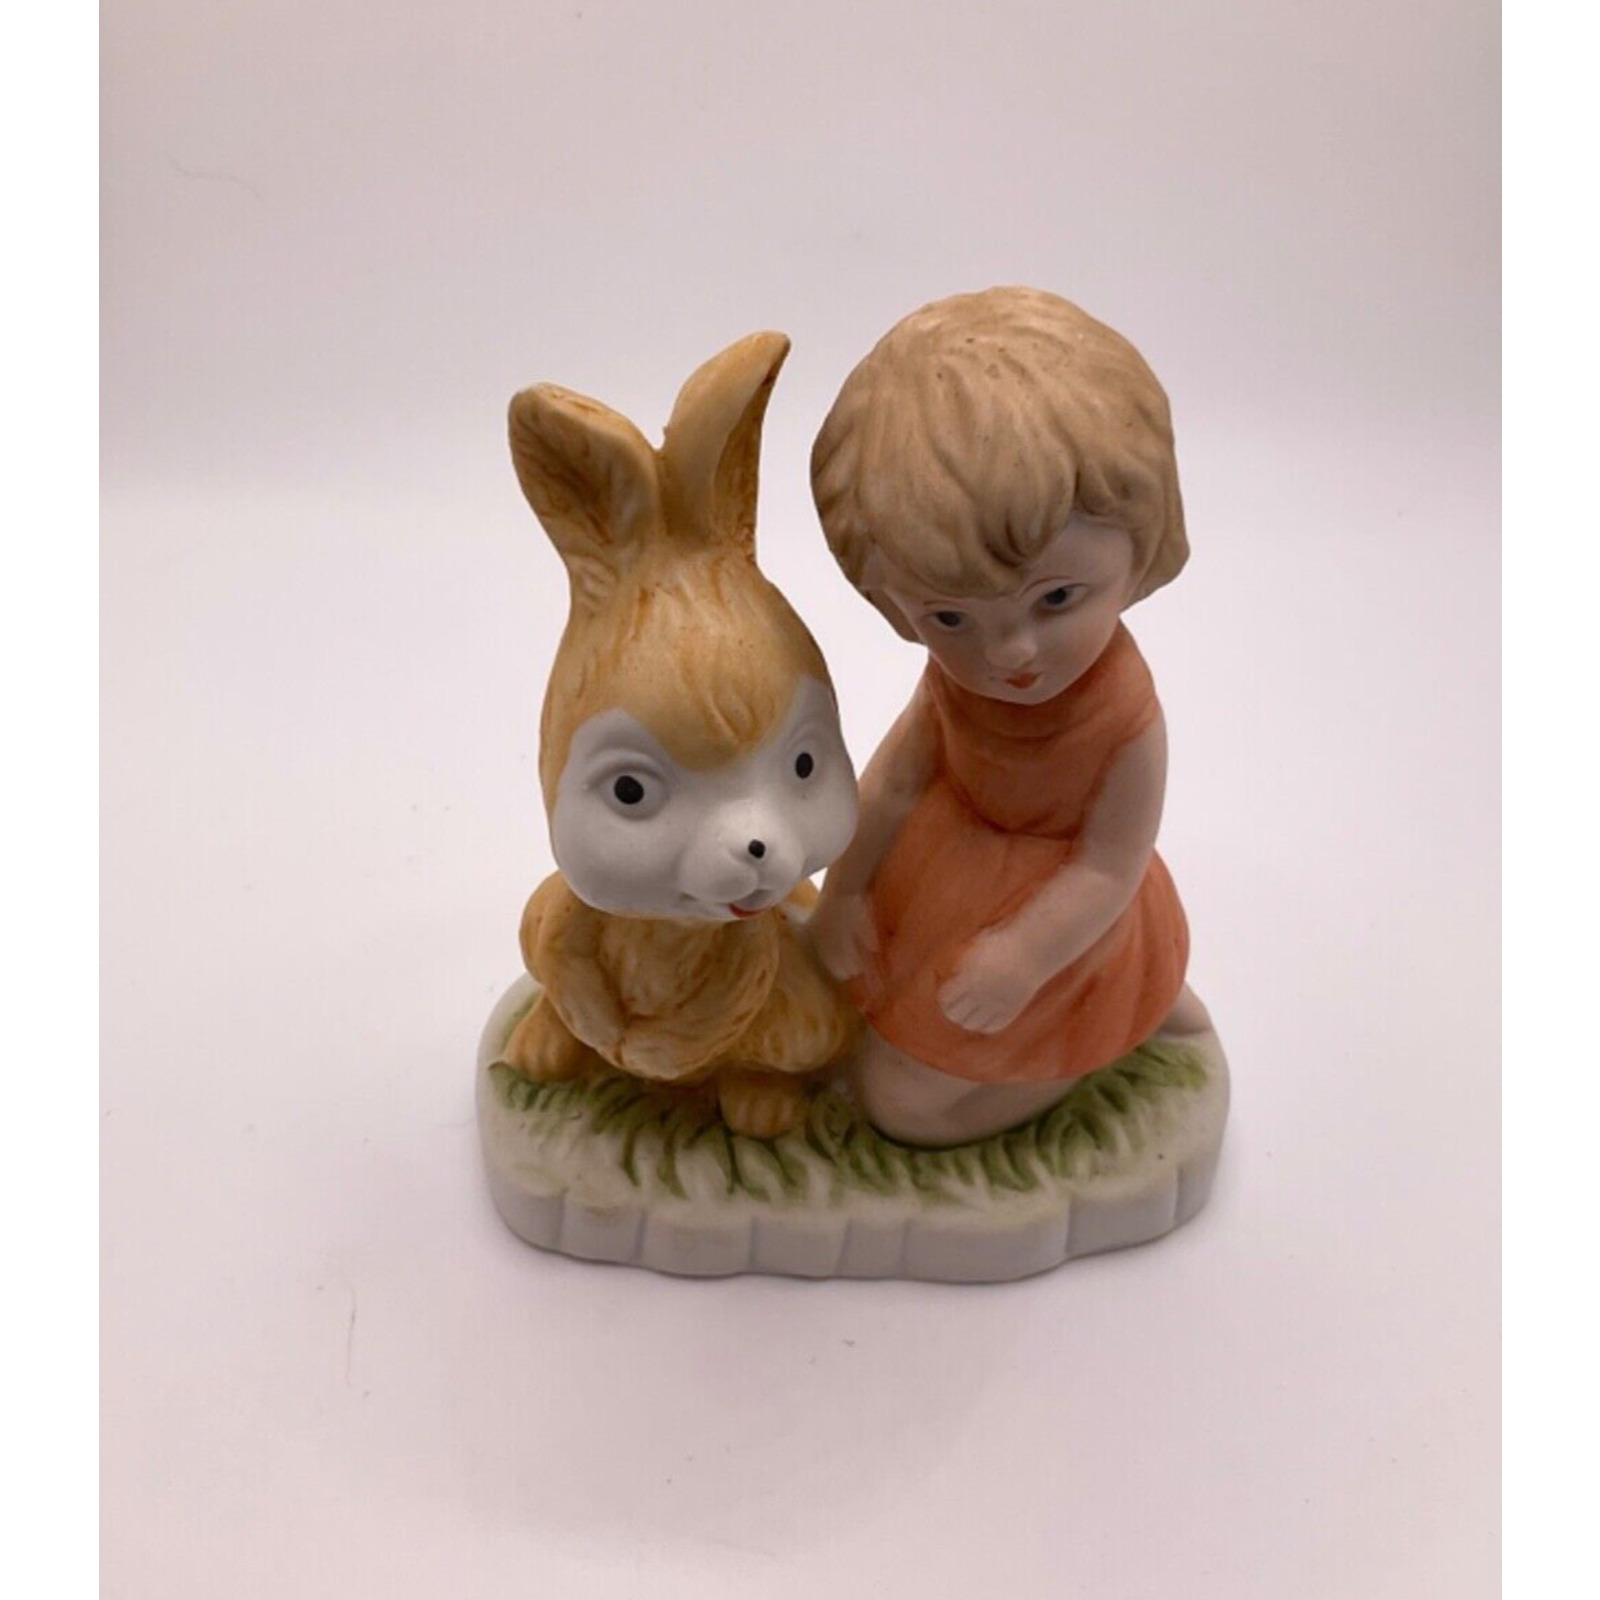 Vintage Young Girl & Rabbit Figurine, 4.5” - Pristine Condition